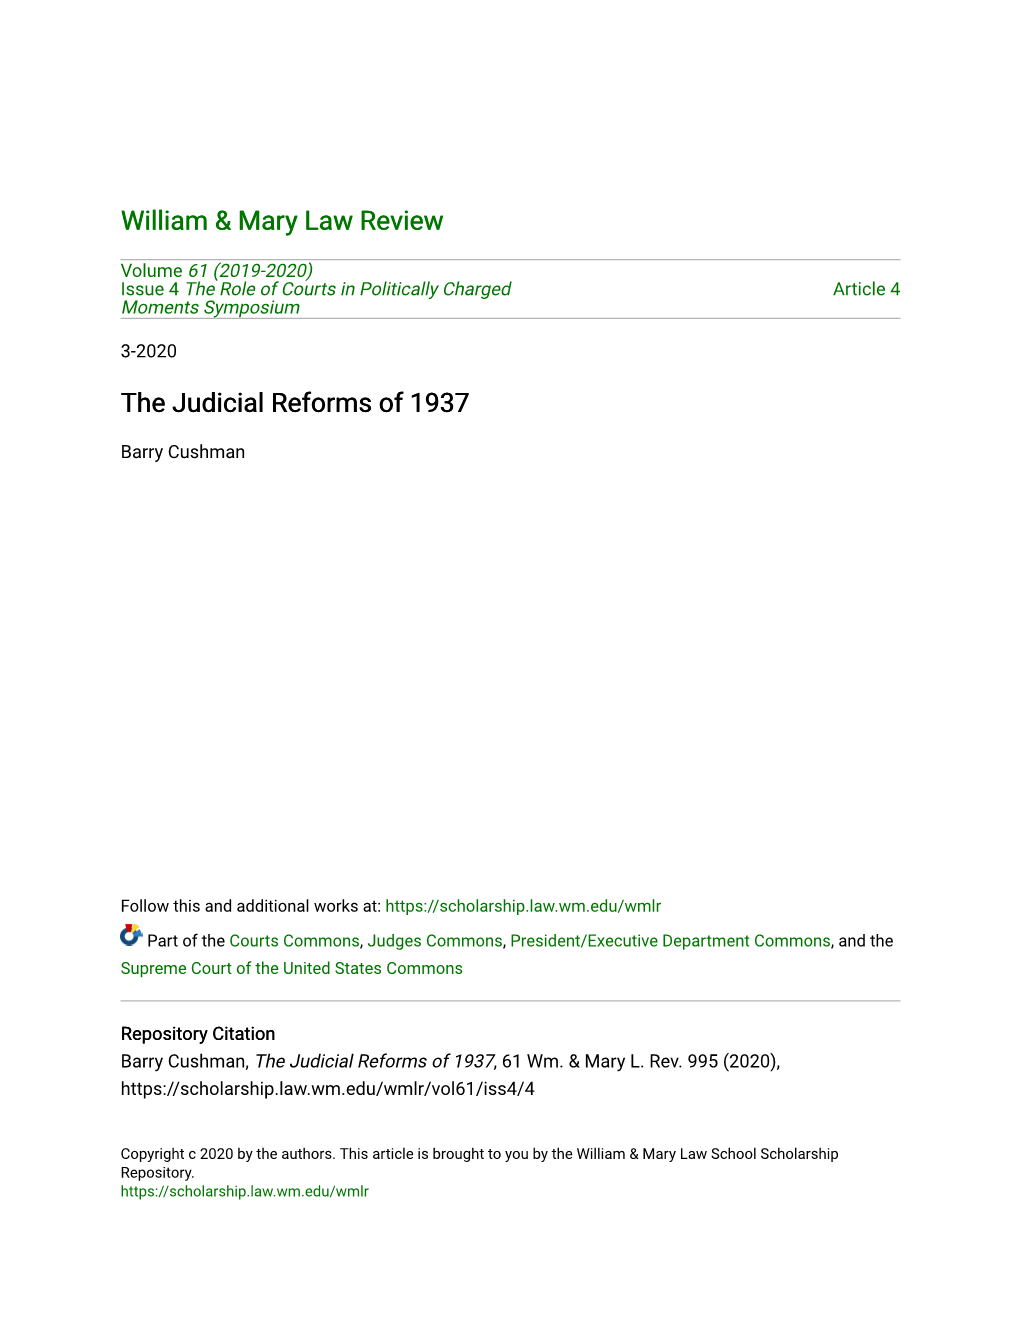 The Judicial Reforms of 1937